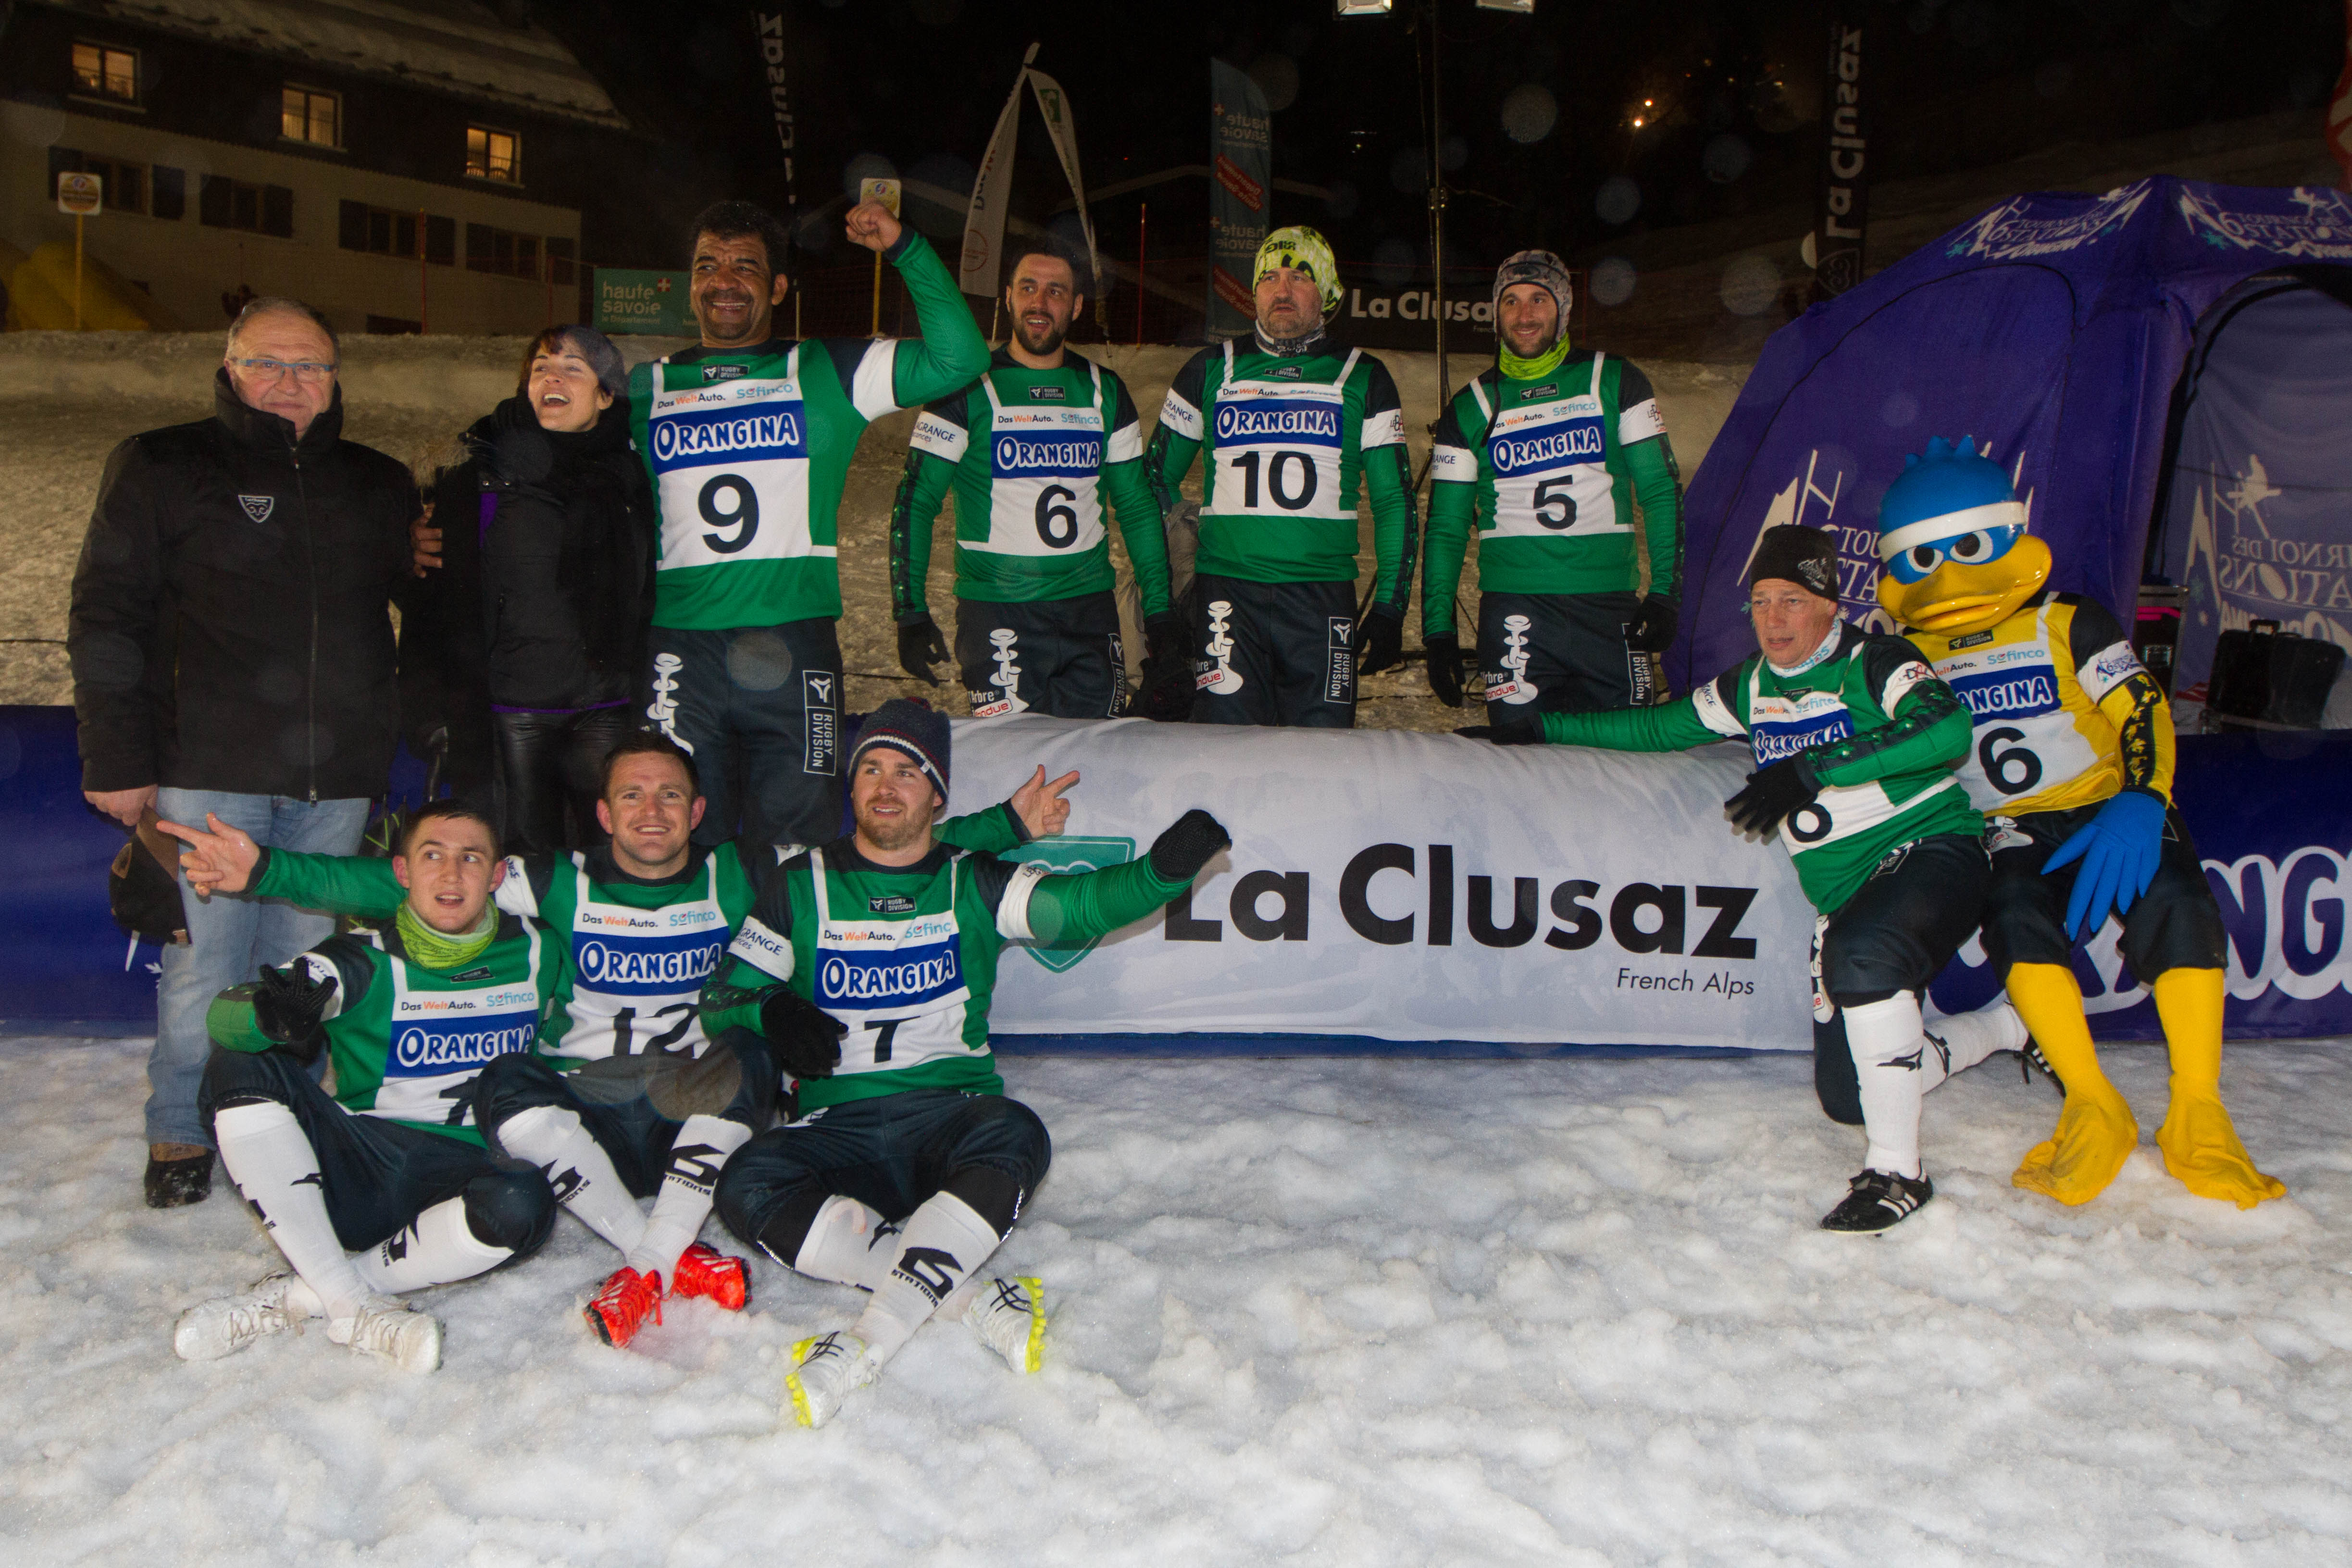 Equipe La Clusaz 2018 - tournoi 6 stations hiver